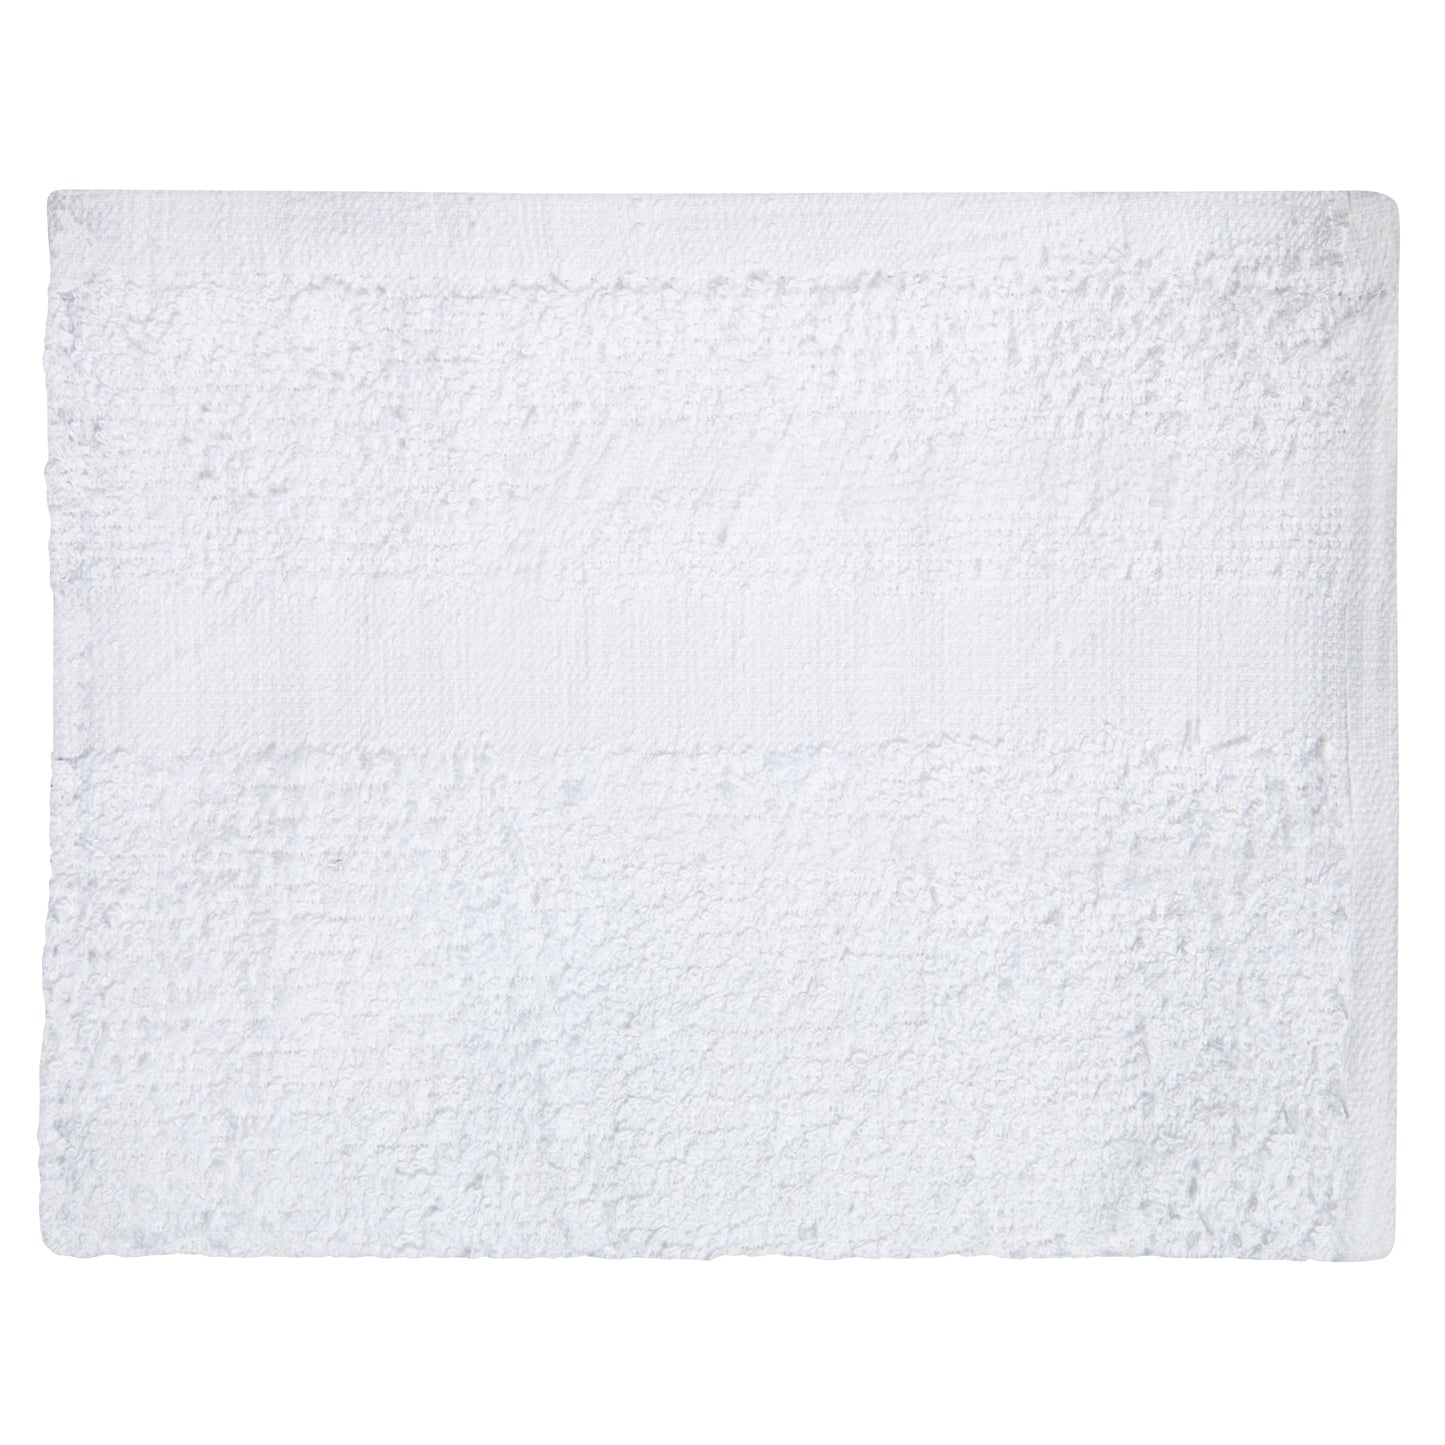 Premium Hand Towel, 16x27 inch, Single Cam, 16 Single Pile, Hemmed, White